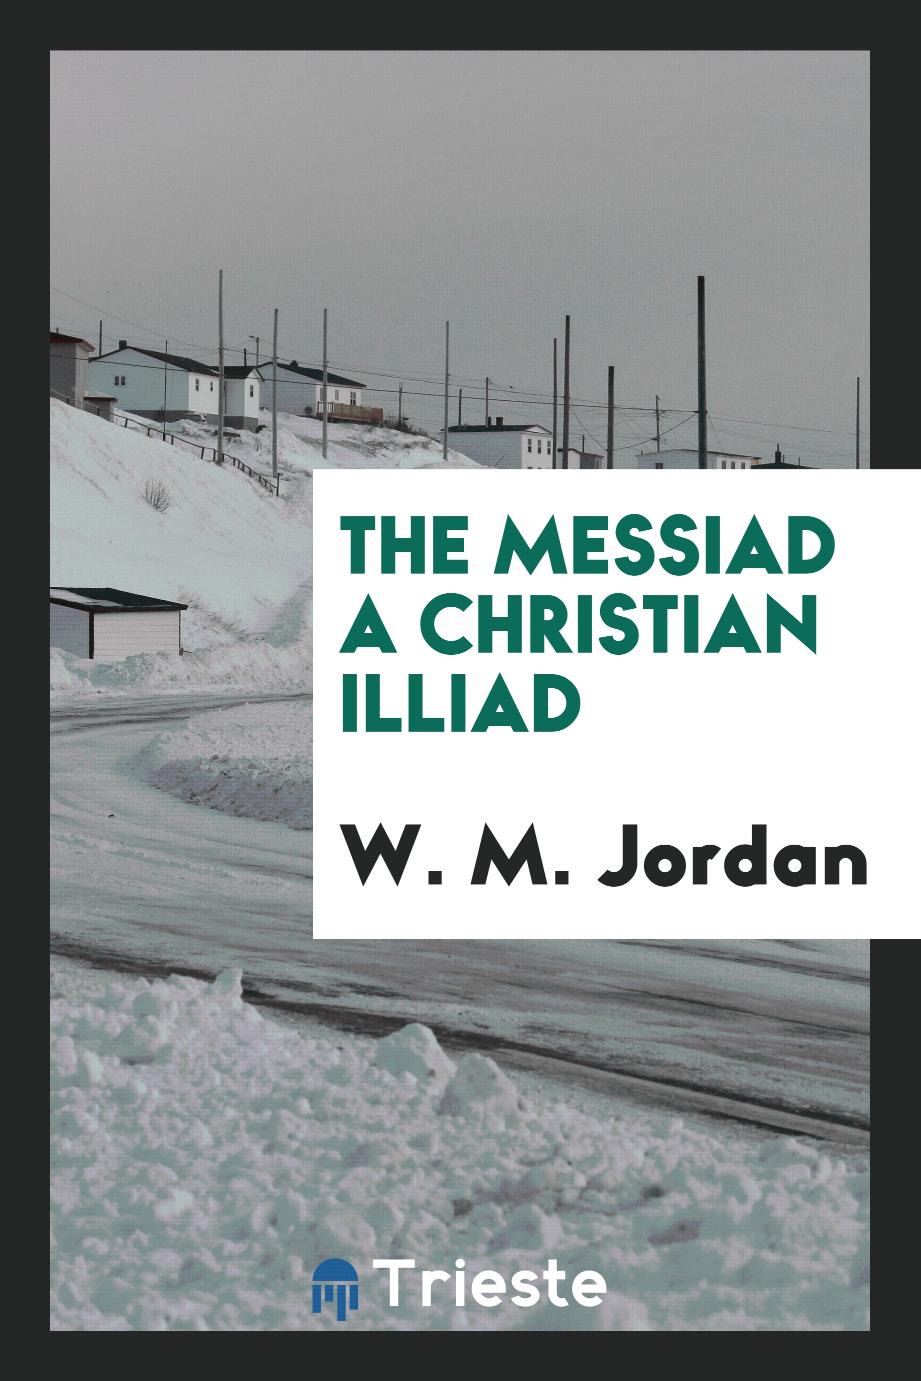 The Messiad a Christian Illiad